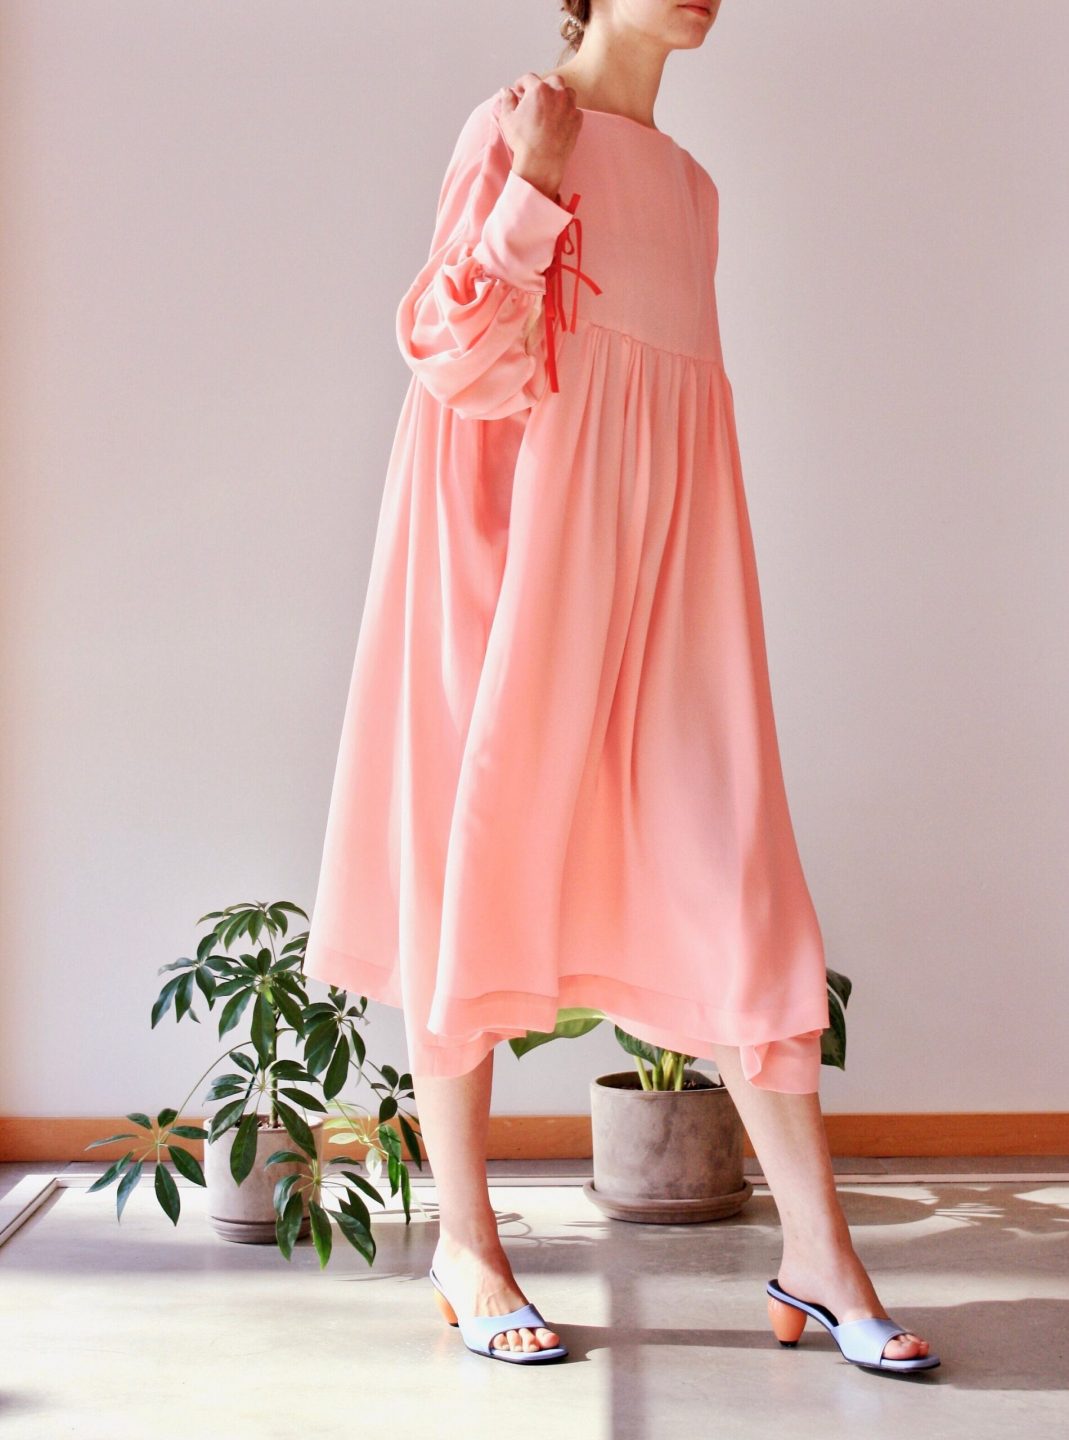 Hot Pink Dress for Spring